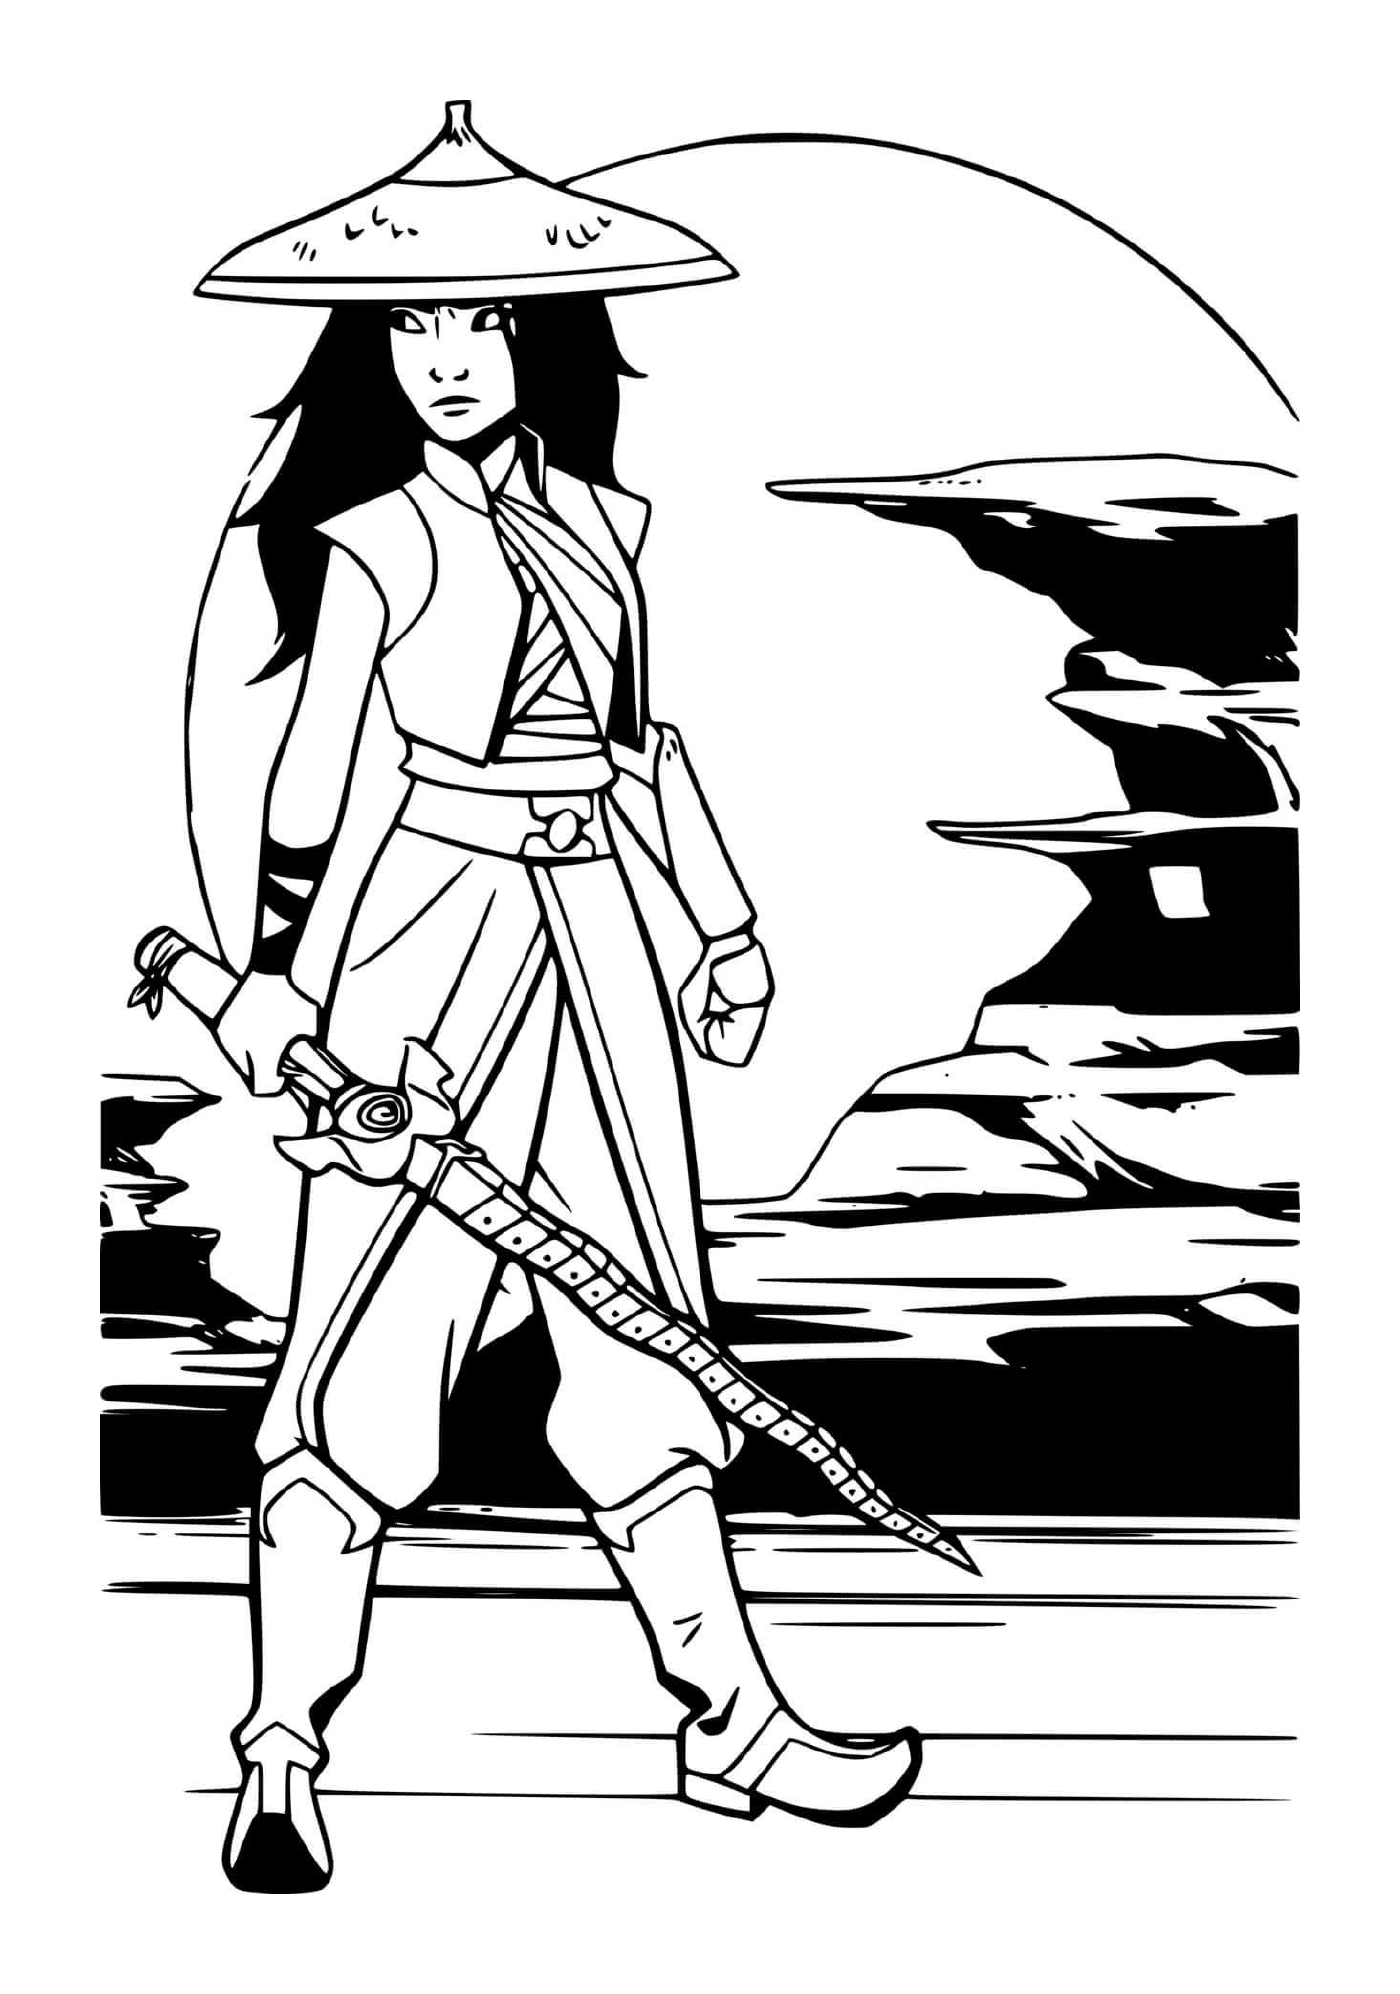  Raya wielded her sword, admirable bravery 